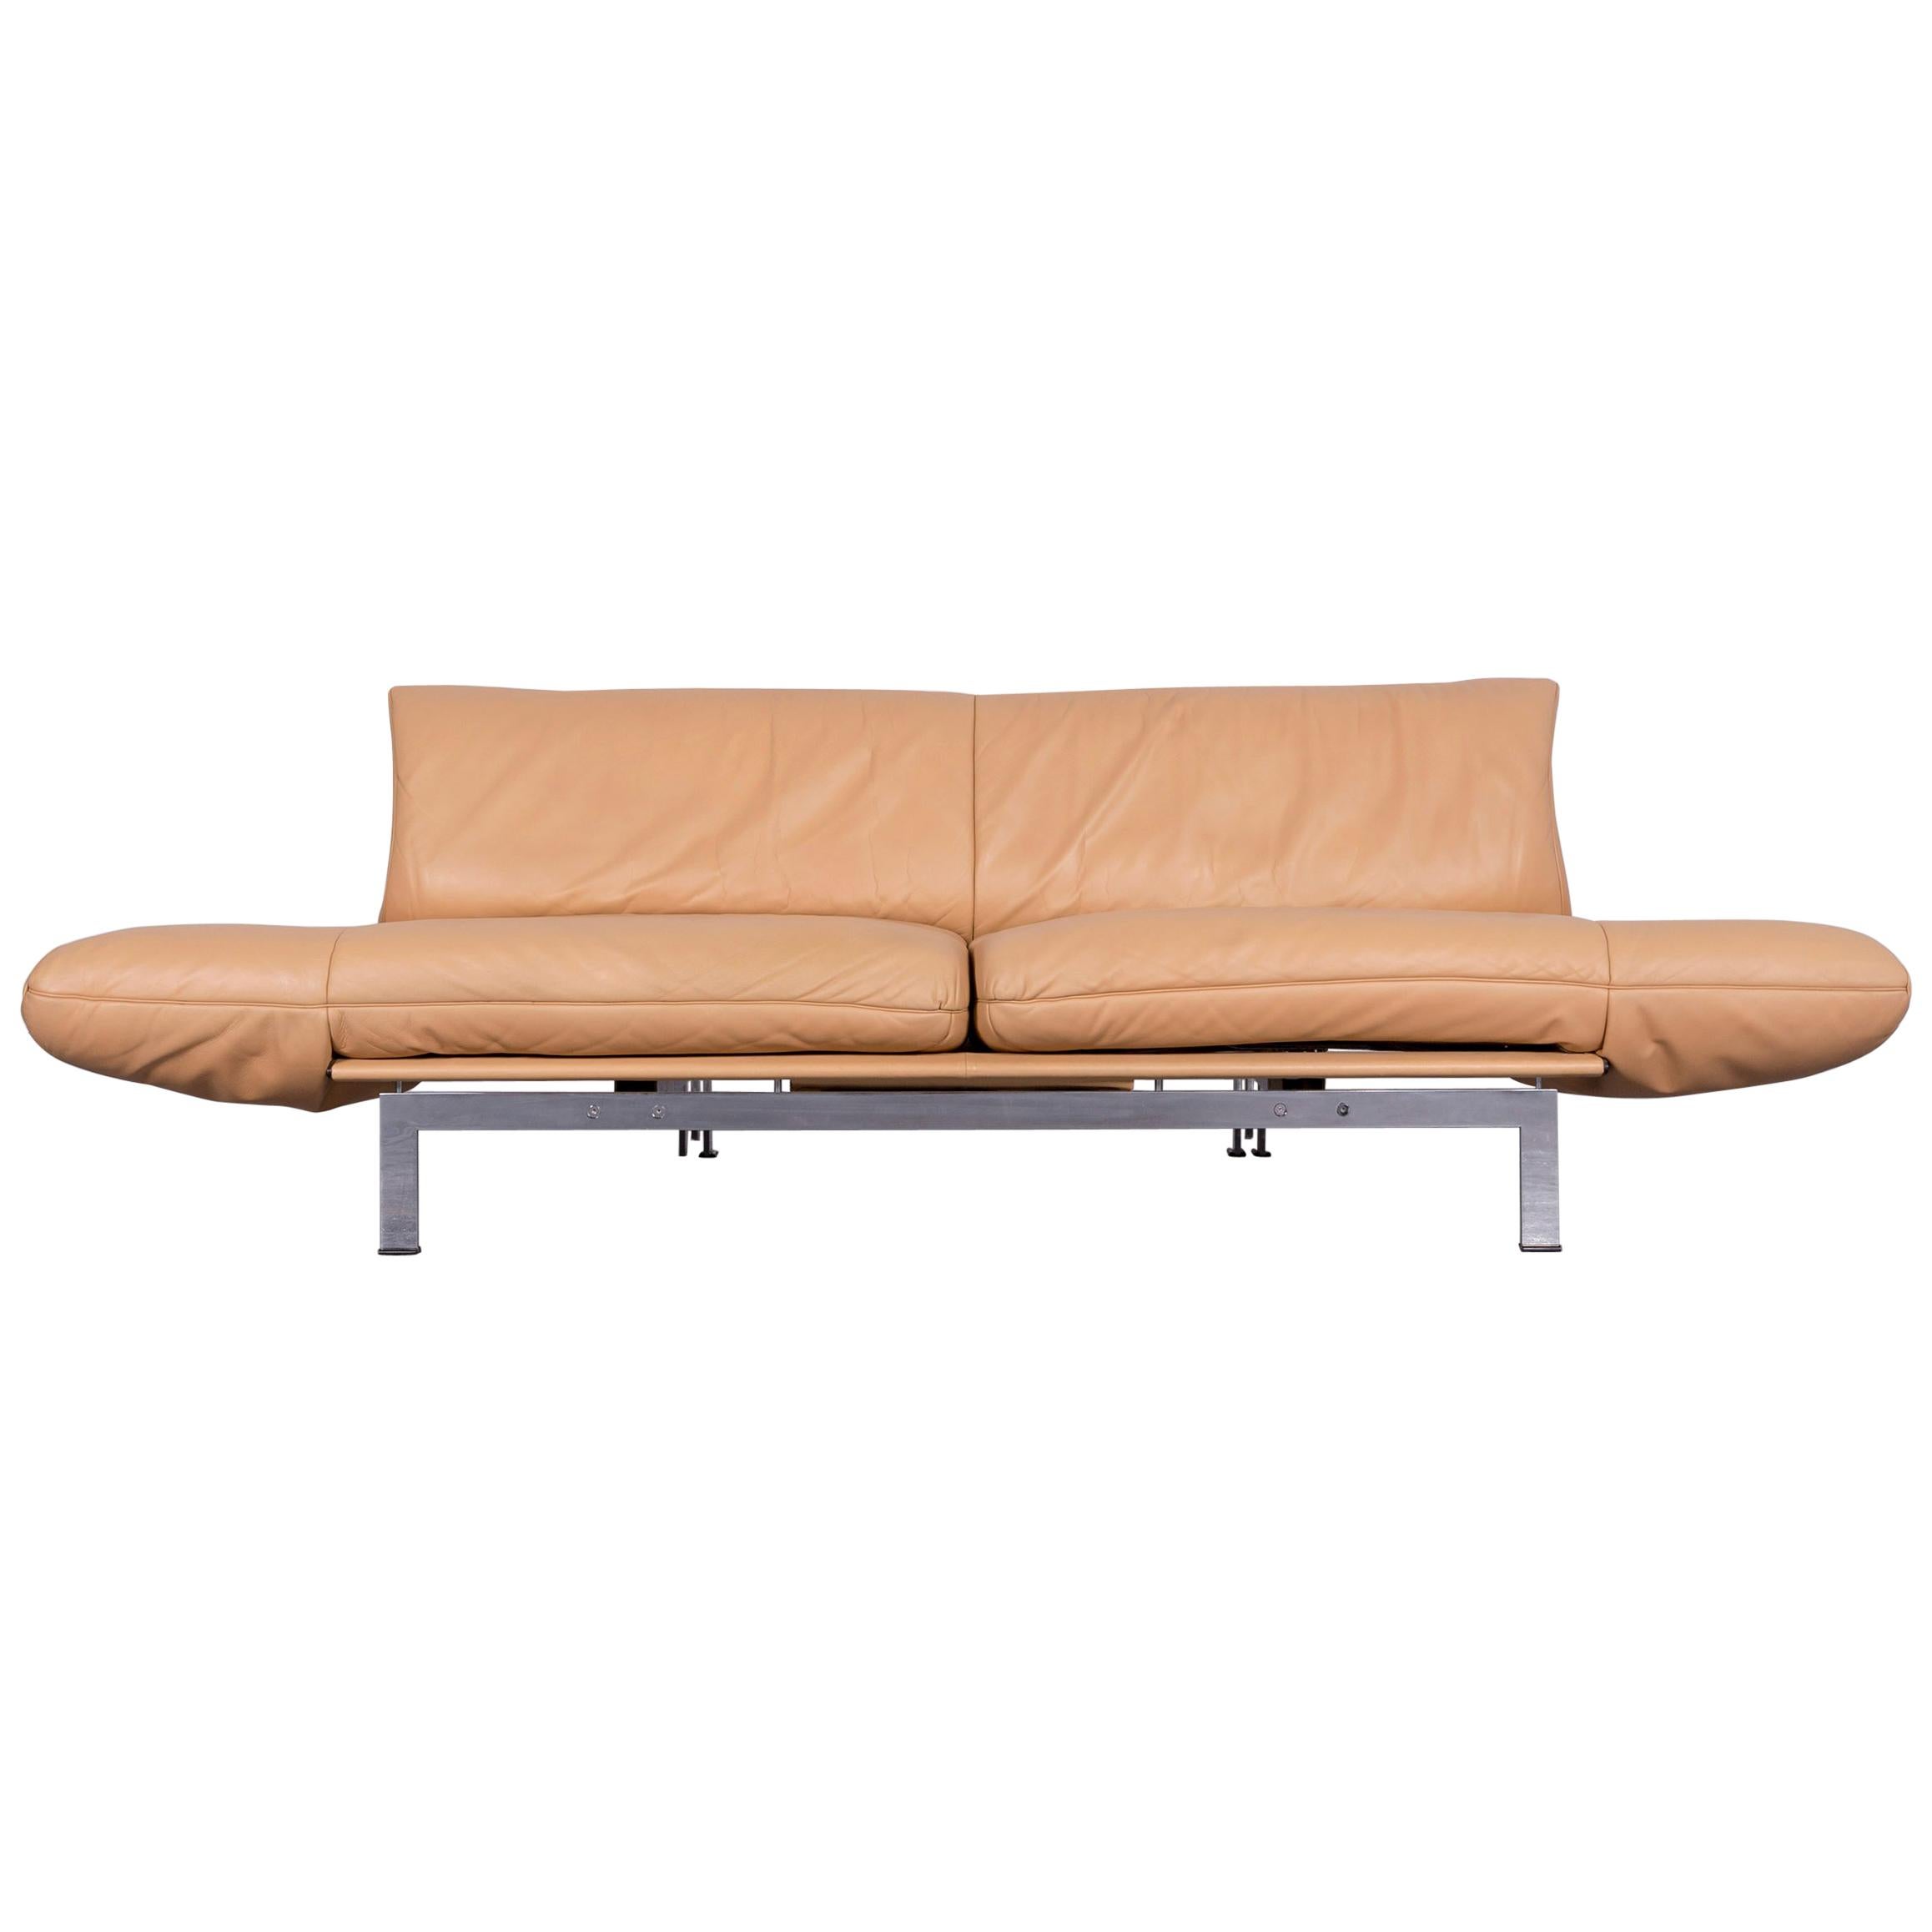 De Sede Ds 140 Designer Leather Sofa Beige Three-Seat Function Modern For Sale